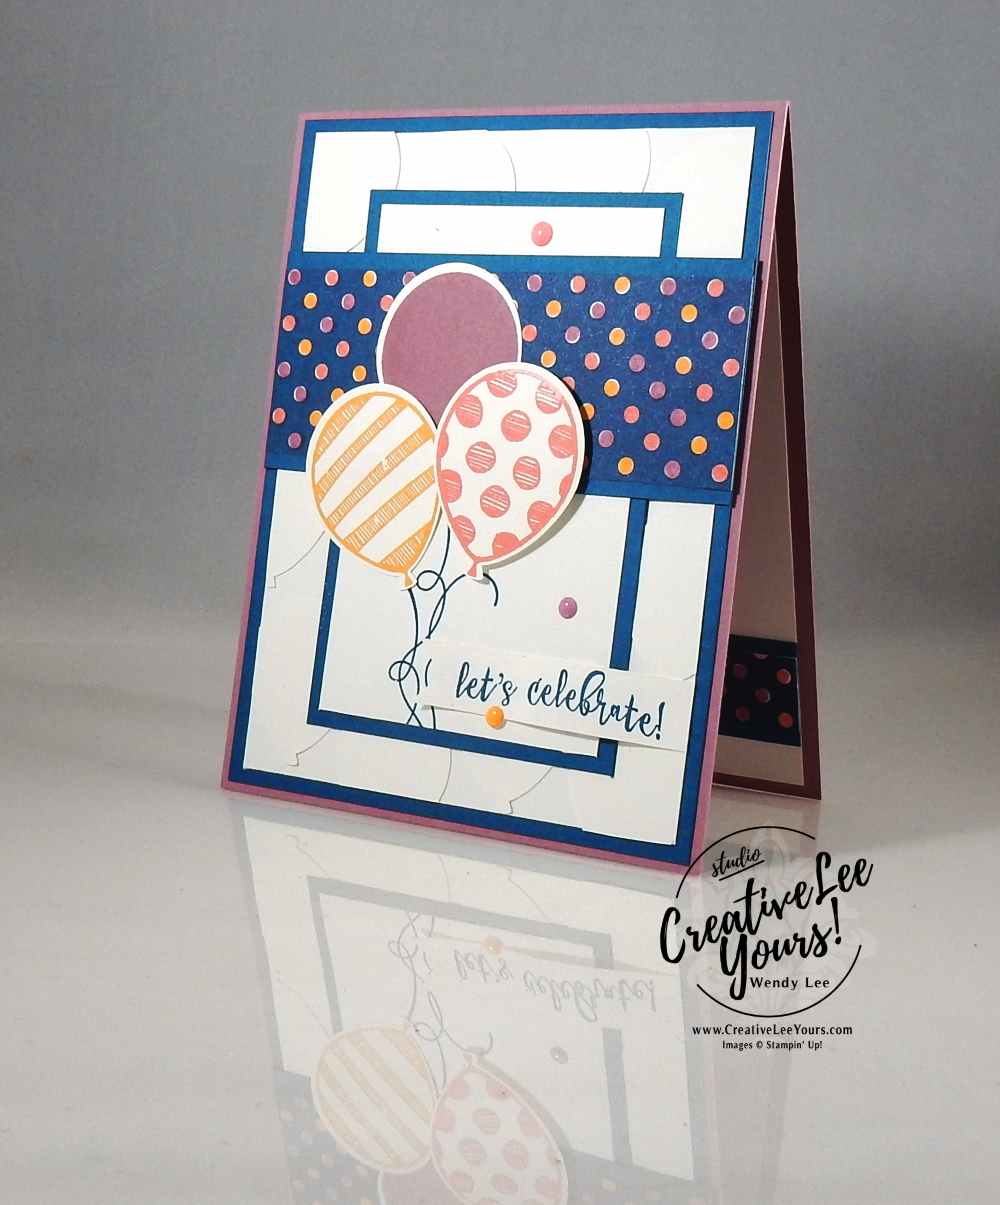 Balloon Adventure 1 sheet wonder by Wendy Lee, class pdf, Stampin Up, #creativeleeyours, cardmaking, rubber stamps, hand made card, balloon adventure stamp set, birthday cards